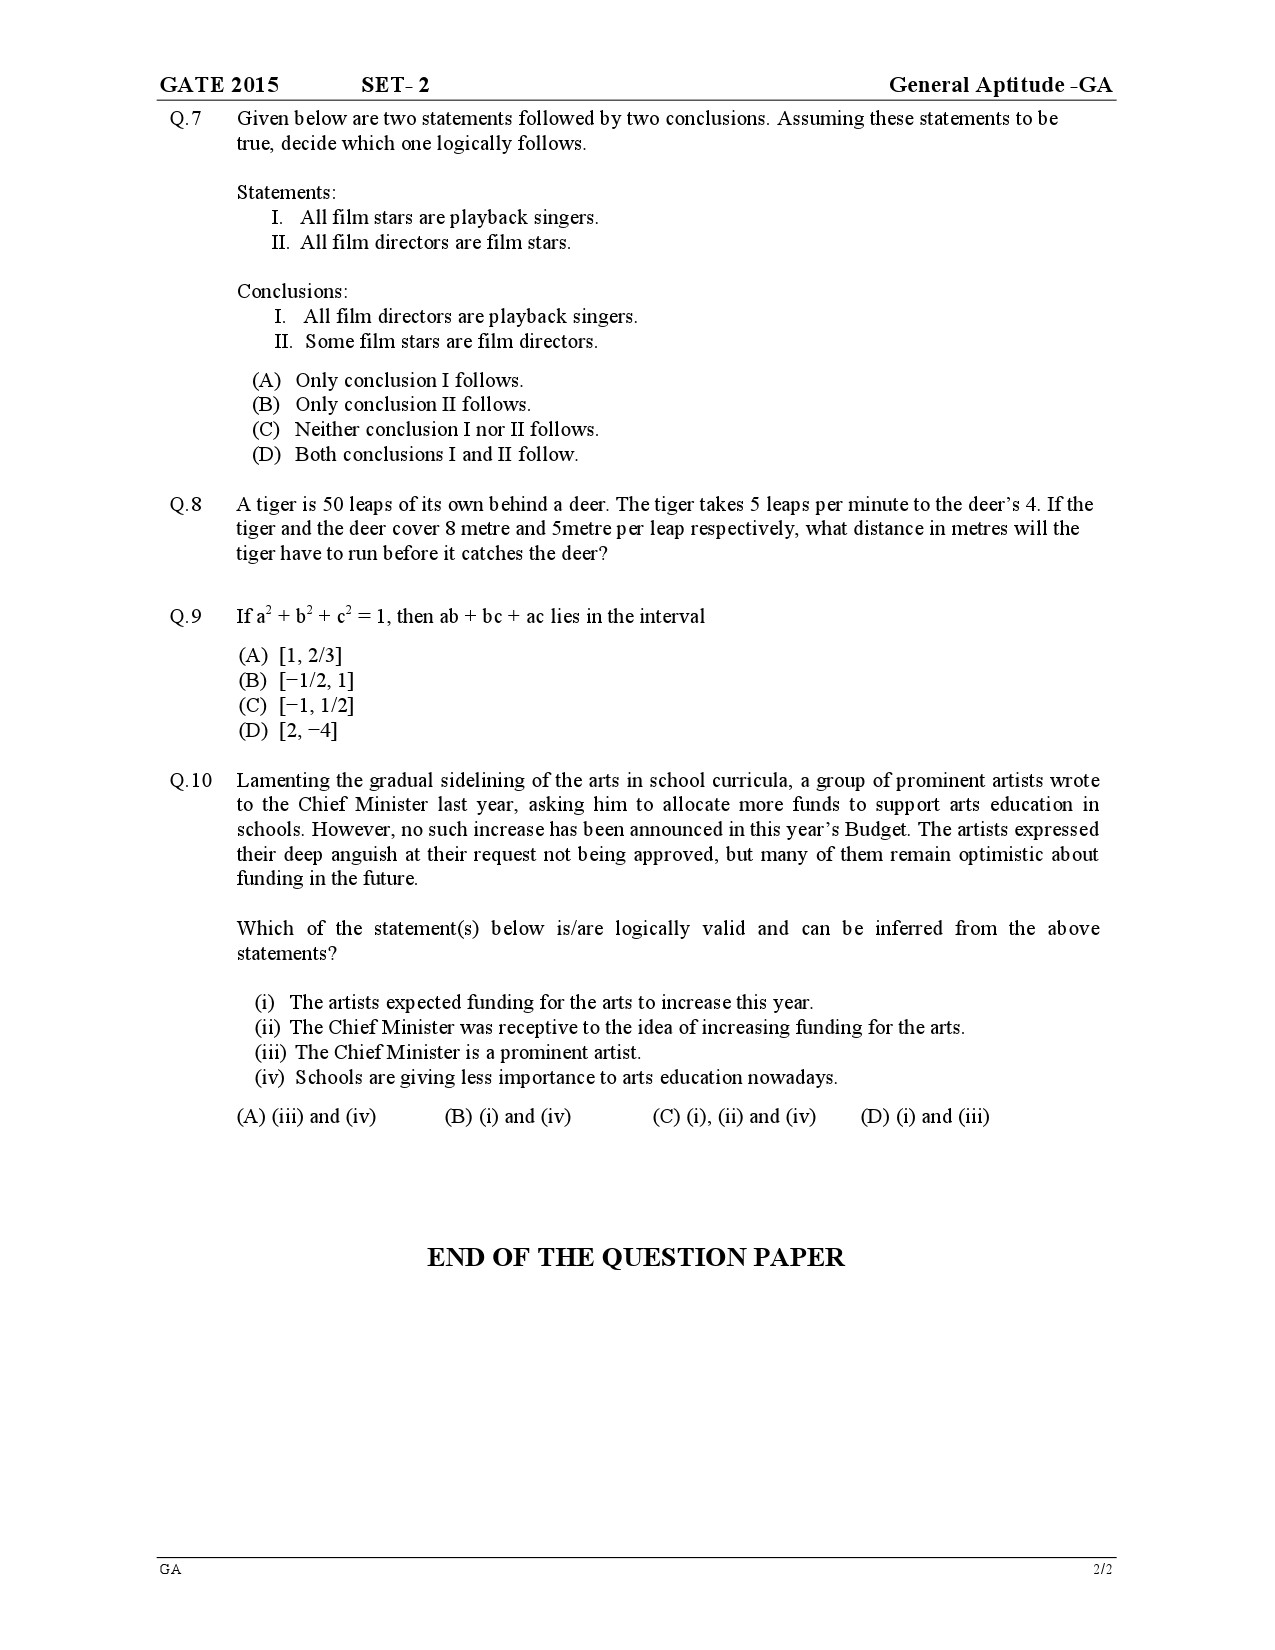 GATE Exam Question Paper 2015 General Aptitude 4